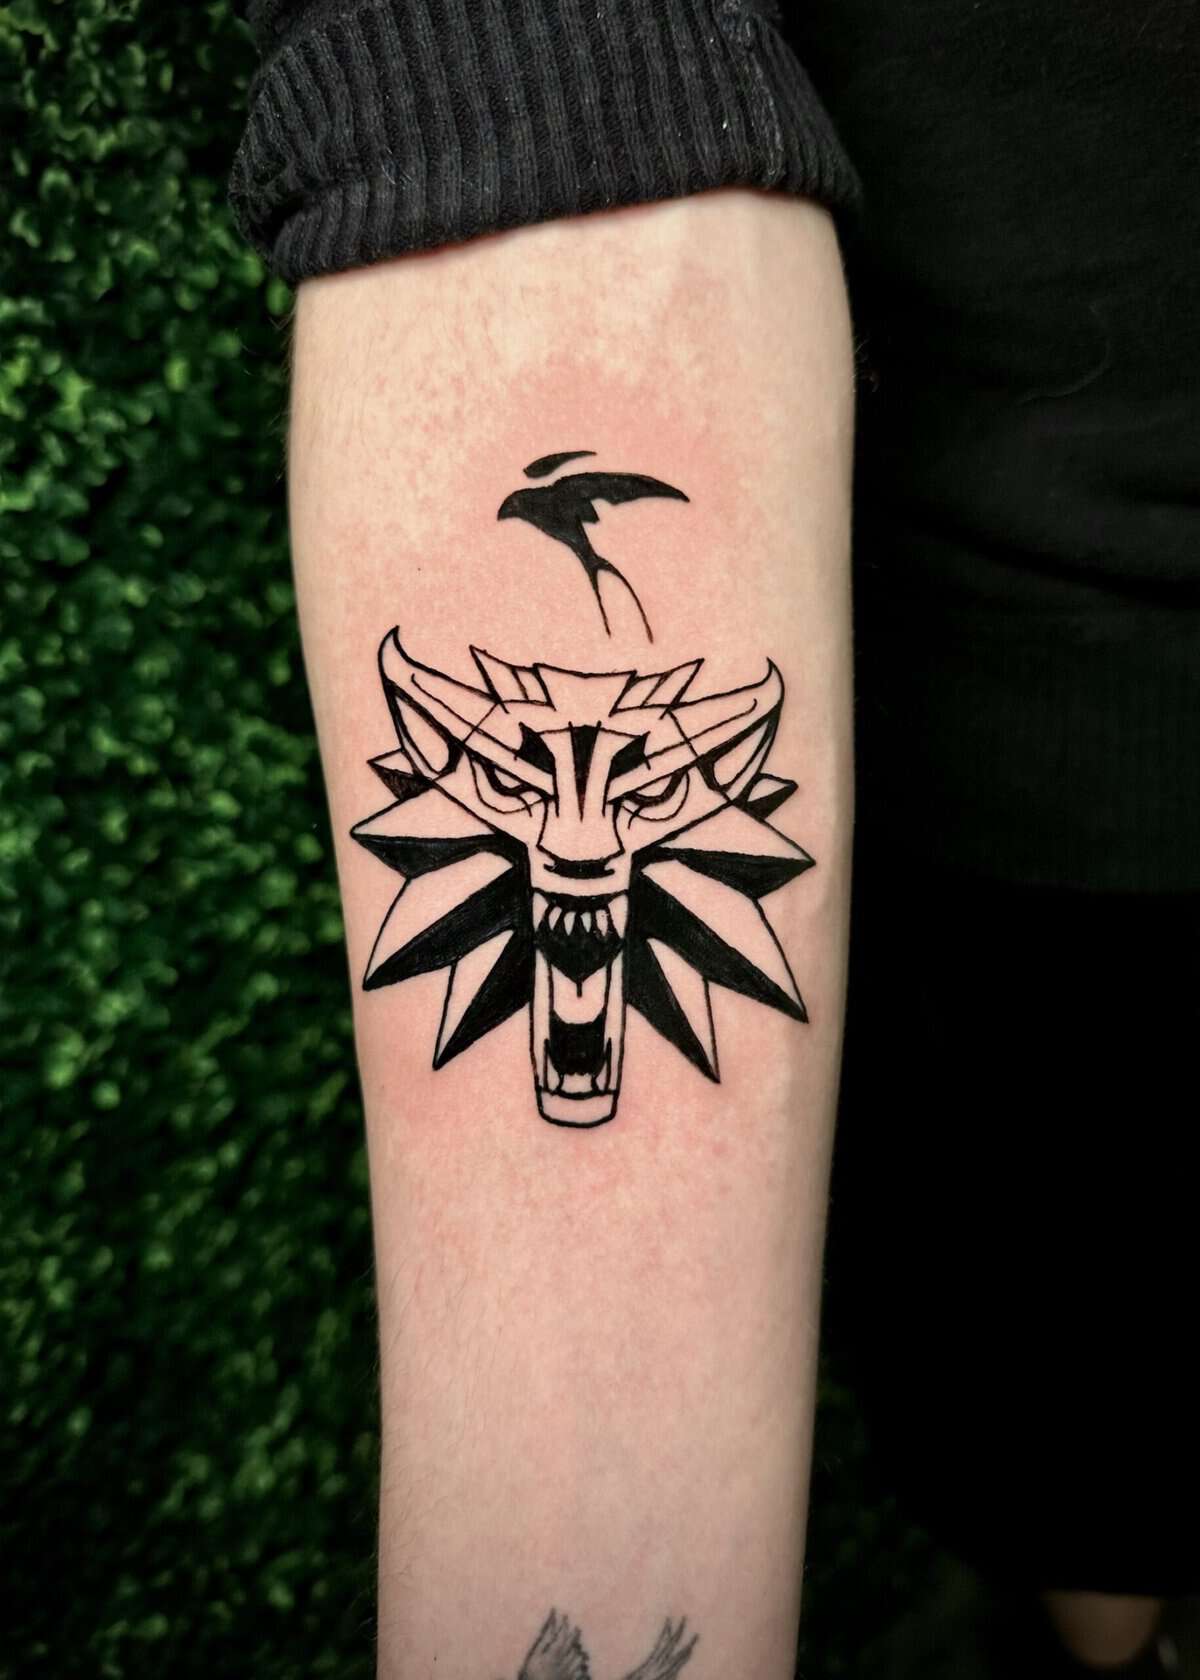 Witcher tattoo omaha